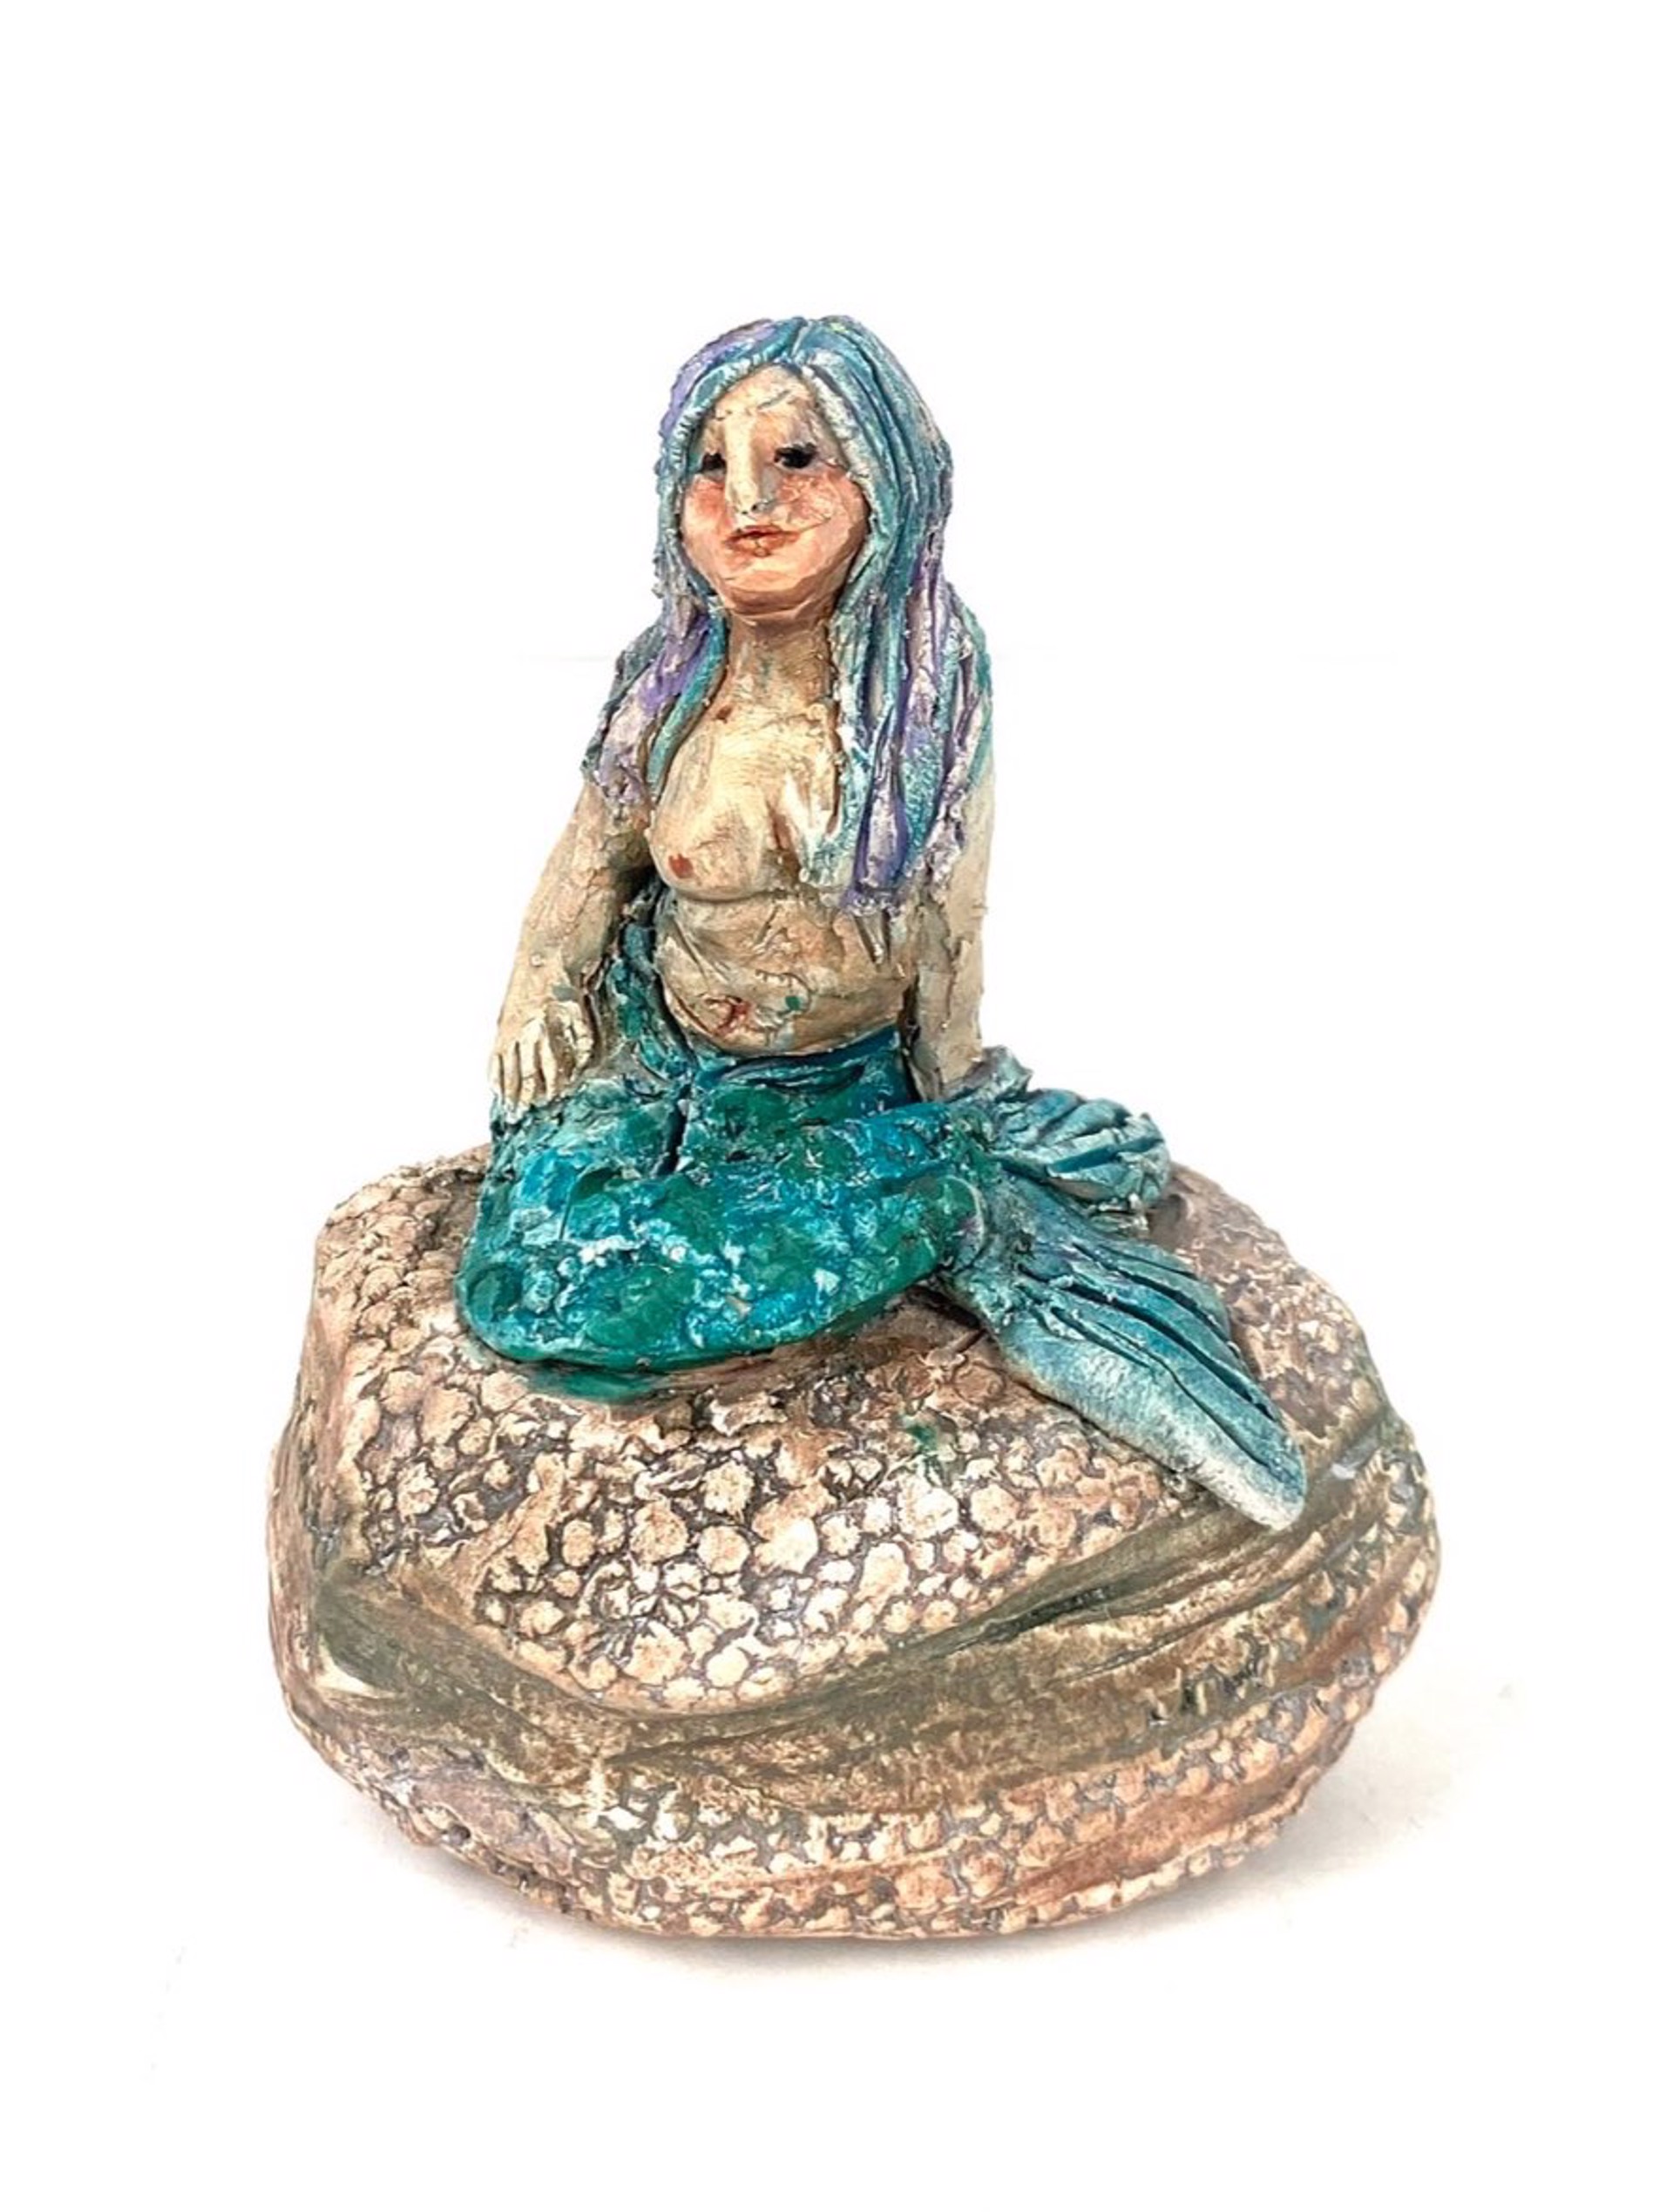 Mermaid by Becky Gray